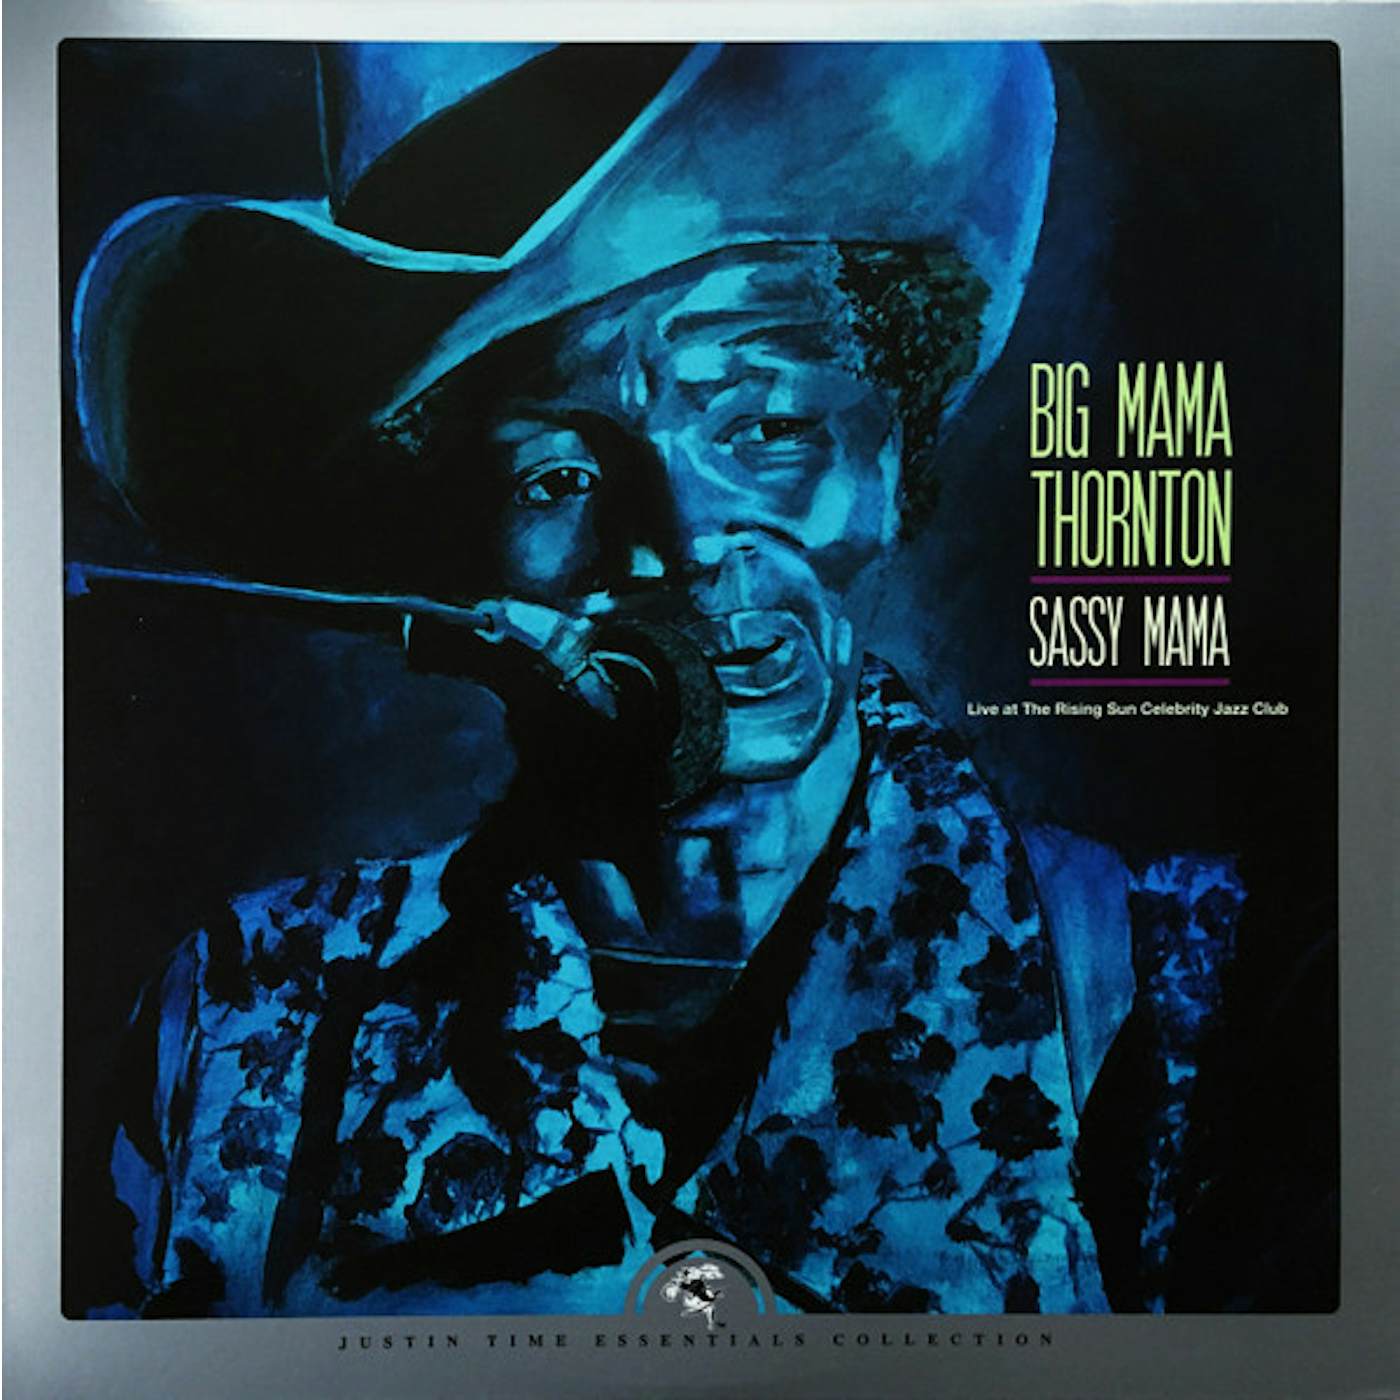 Big Mama Thornton SASSY MAMA - LIVE AT THE RISING SUN CELEBRITY Vinyl Record